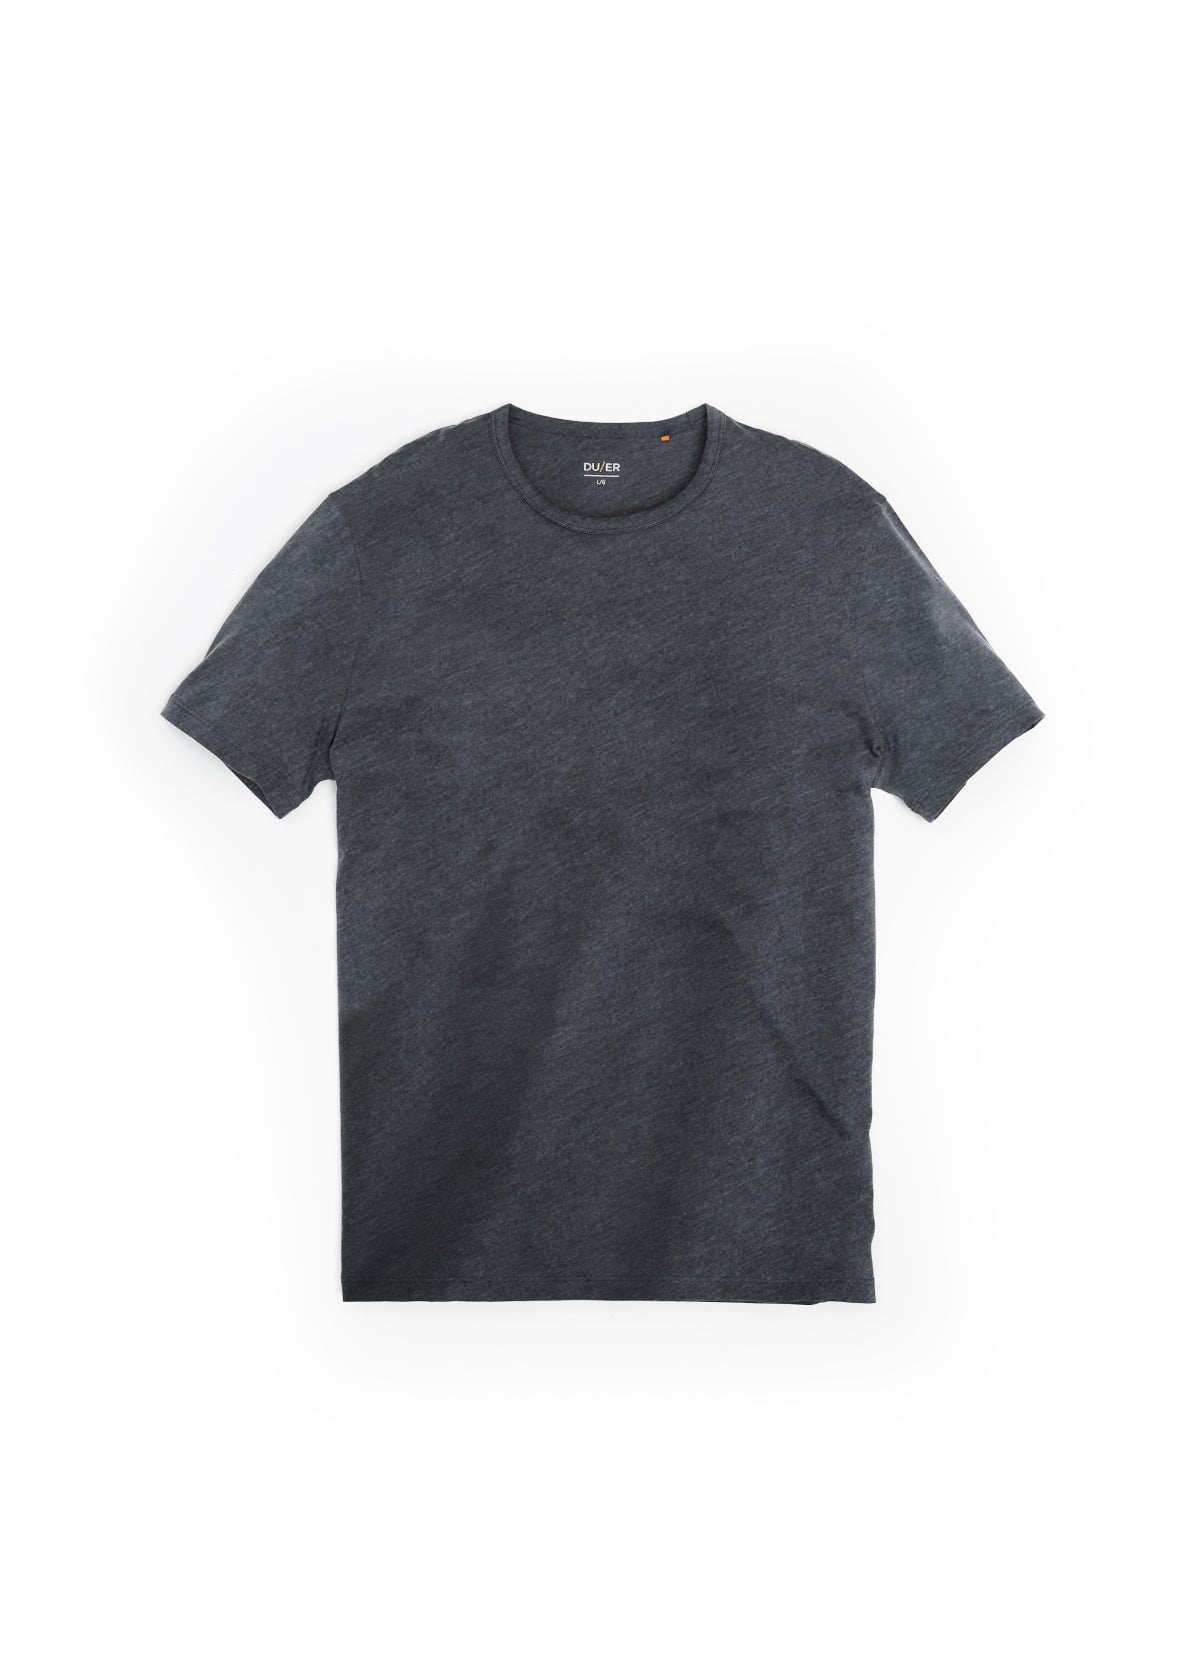 men's charcoal grey tshirt